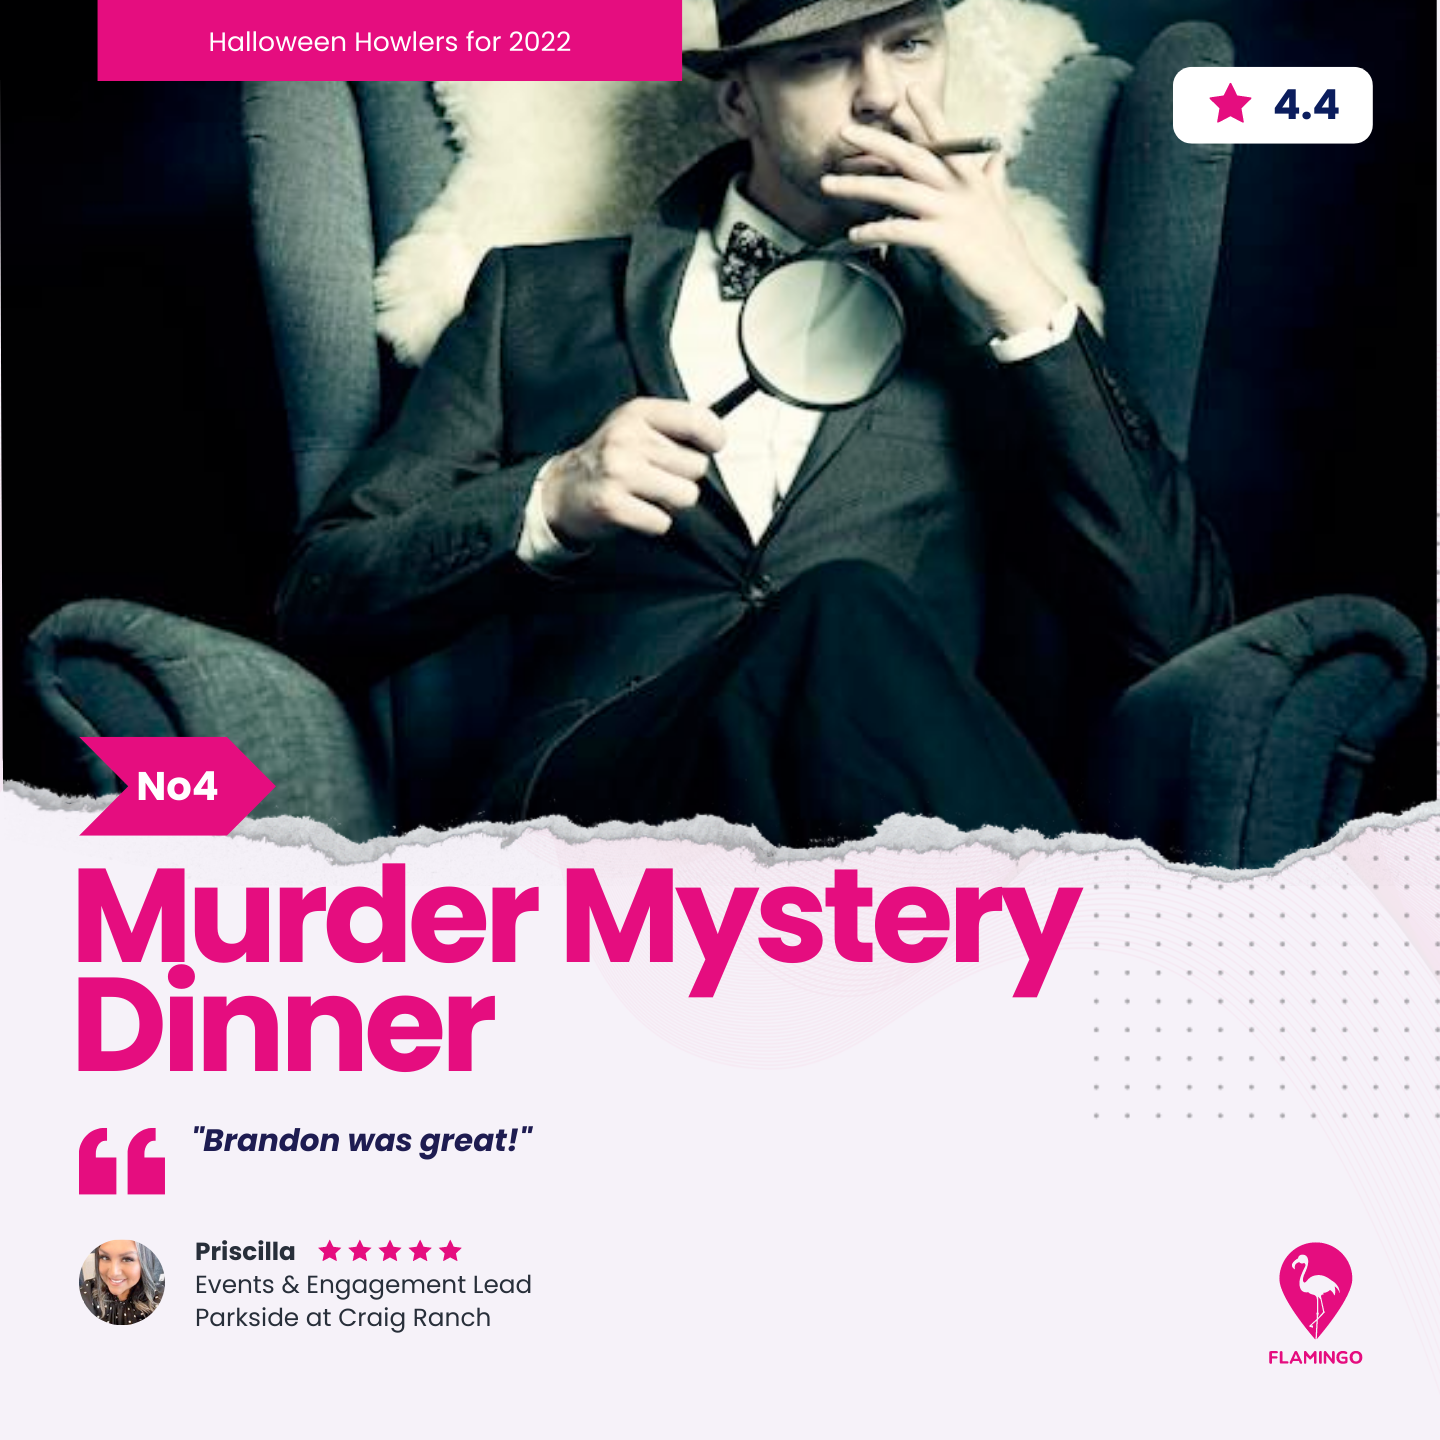 Murder Mystery Dinner | Halloween Resident Event Ideas